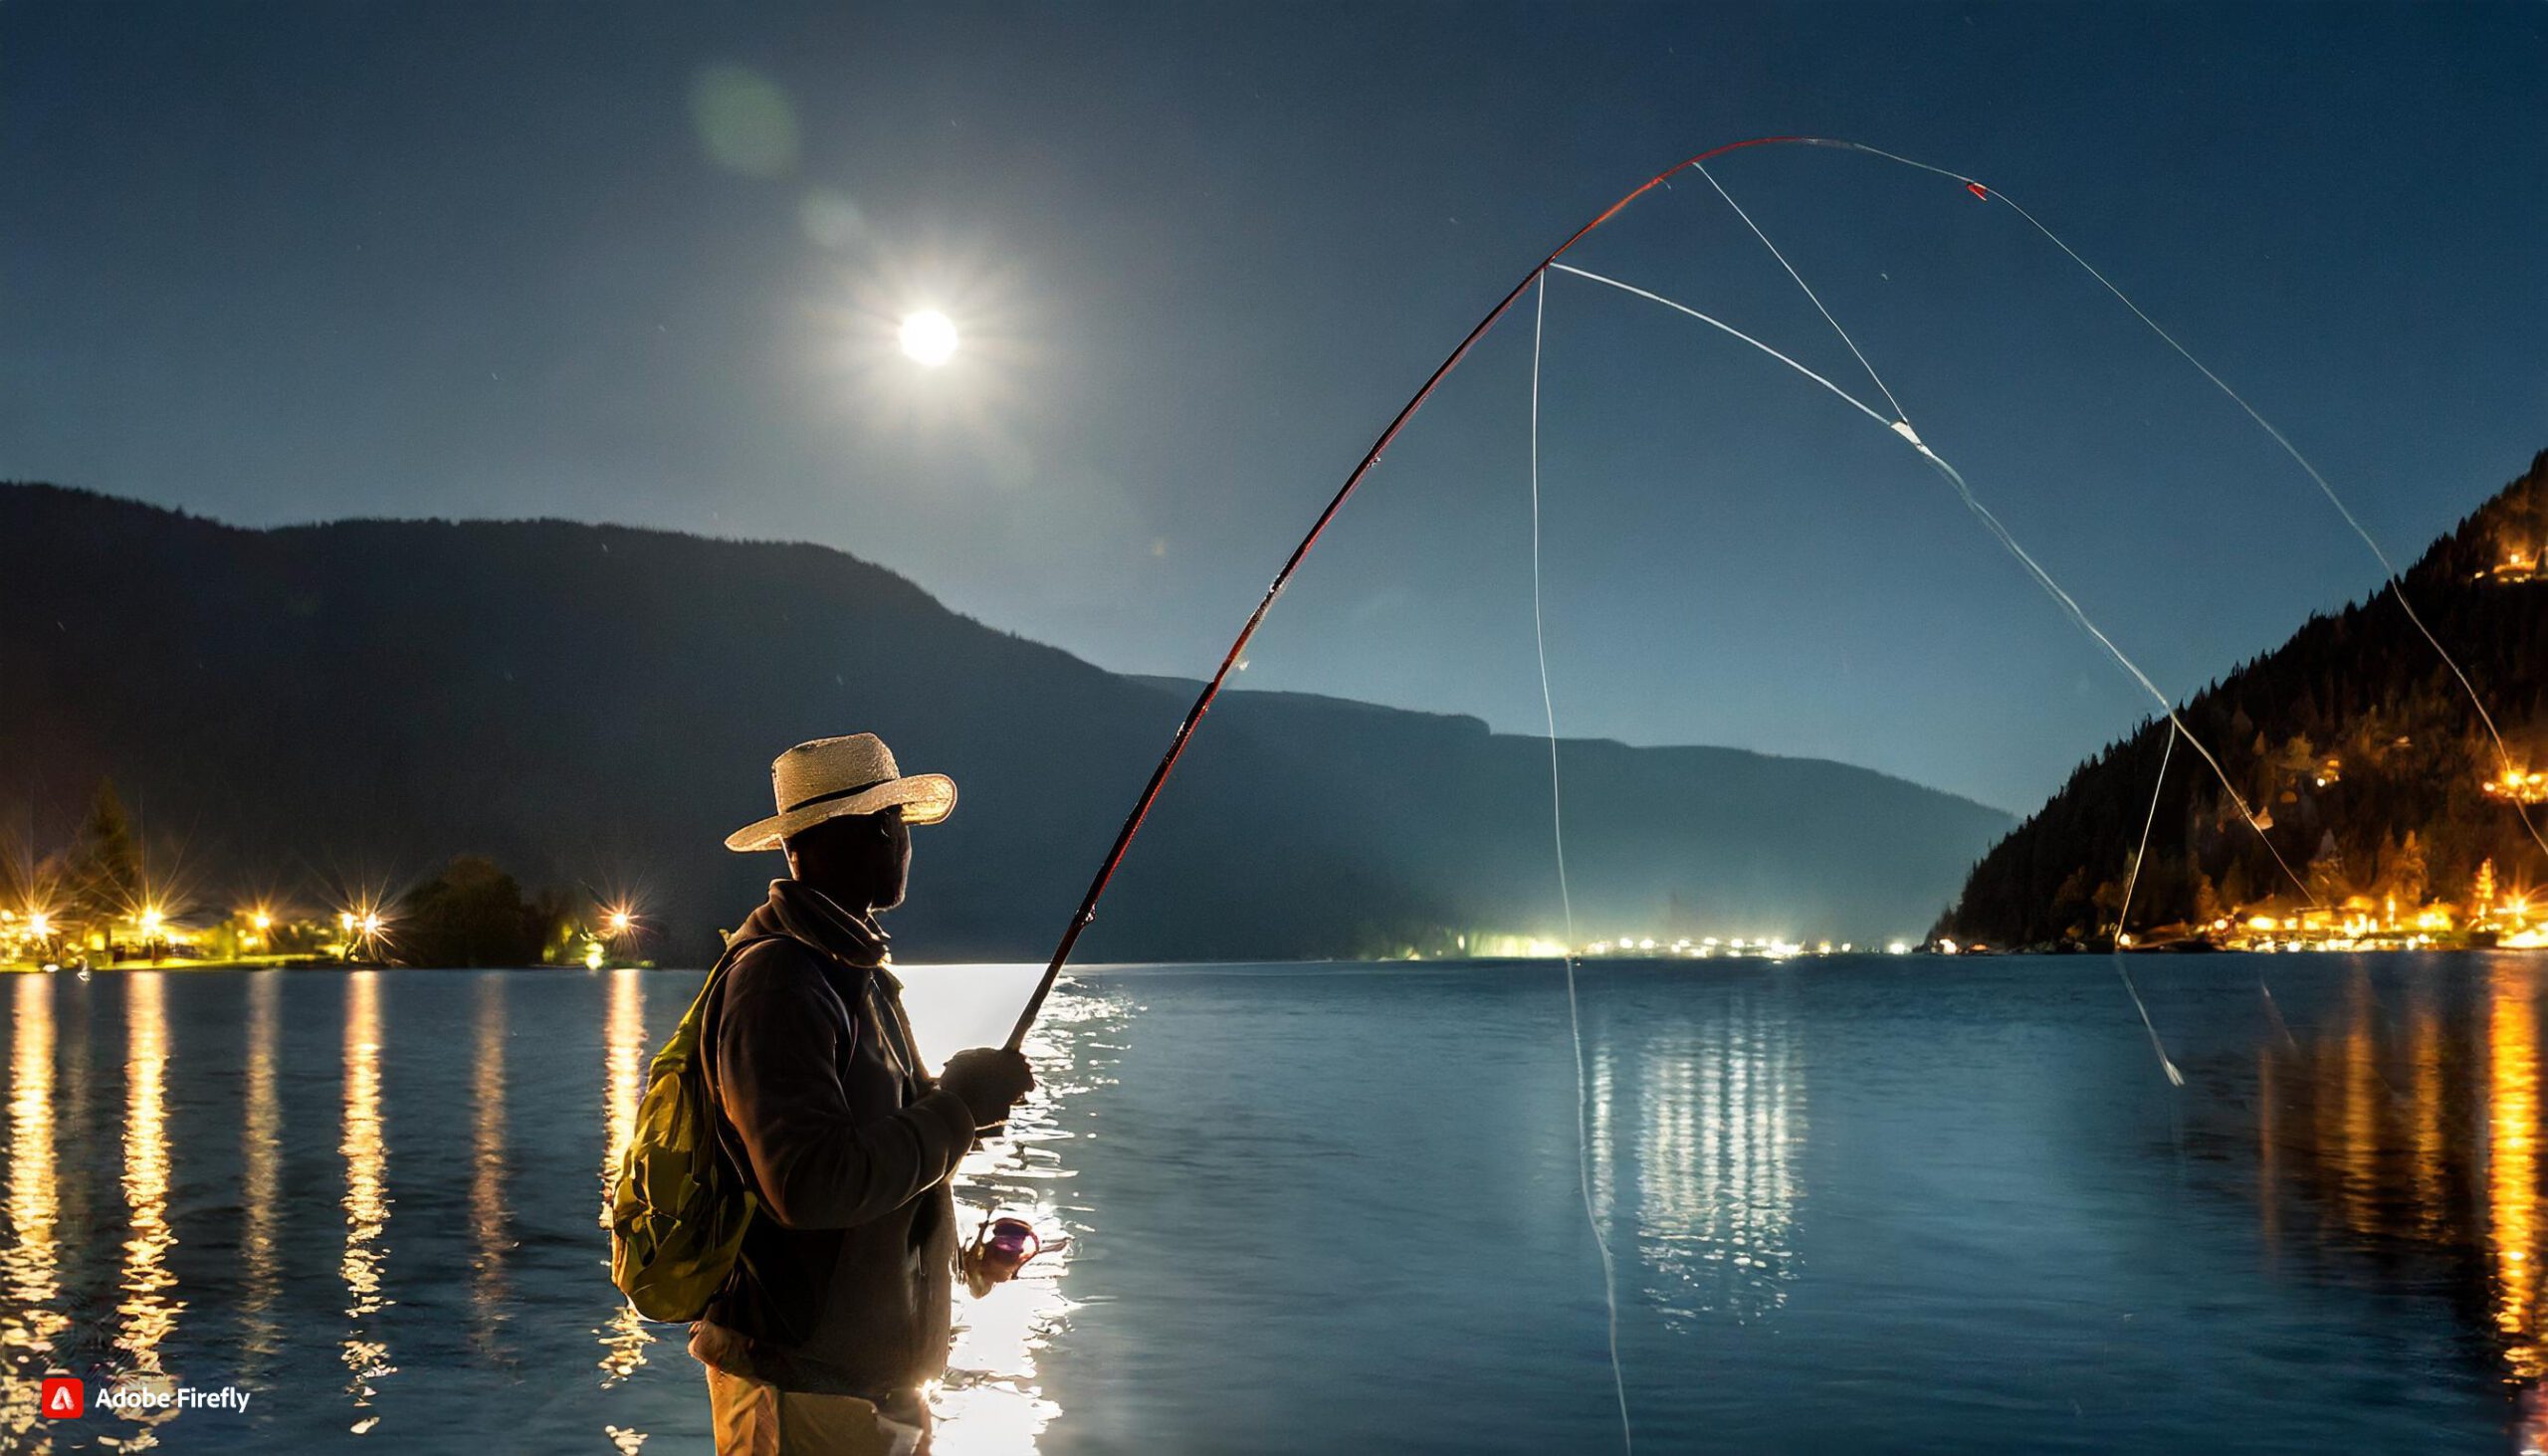 Is night fishing legal?